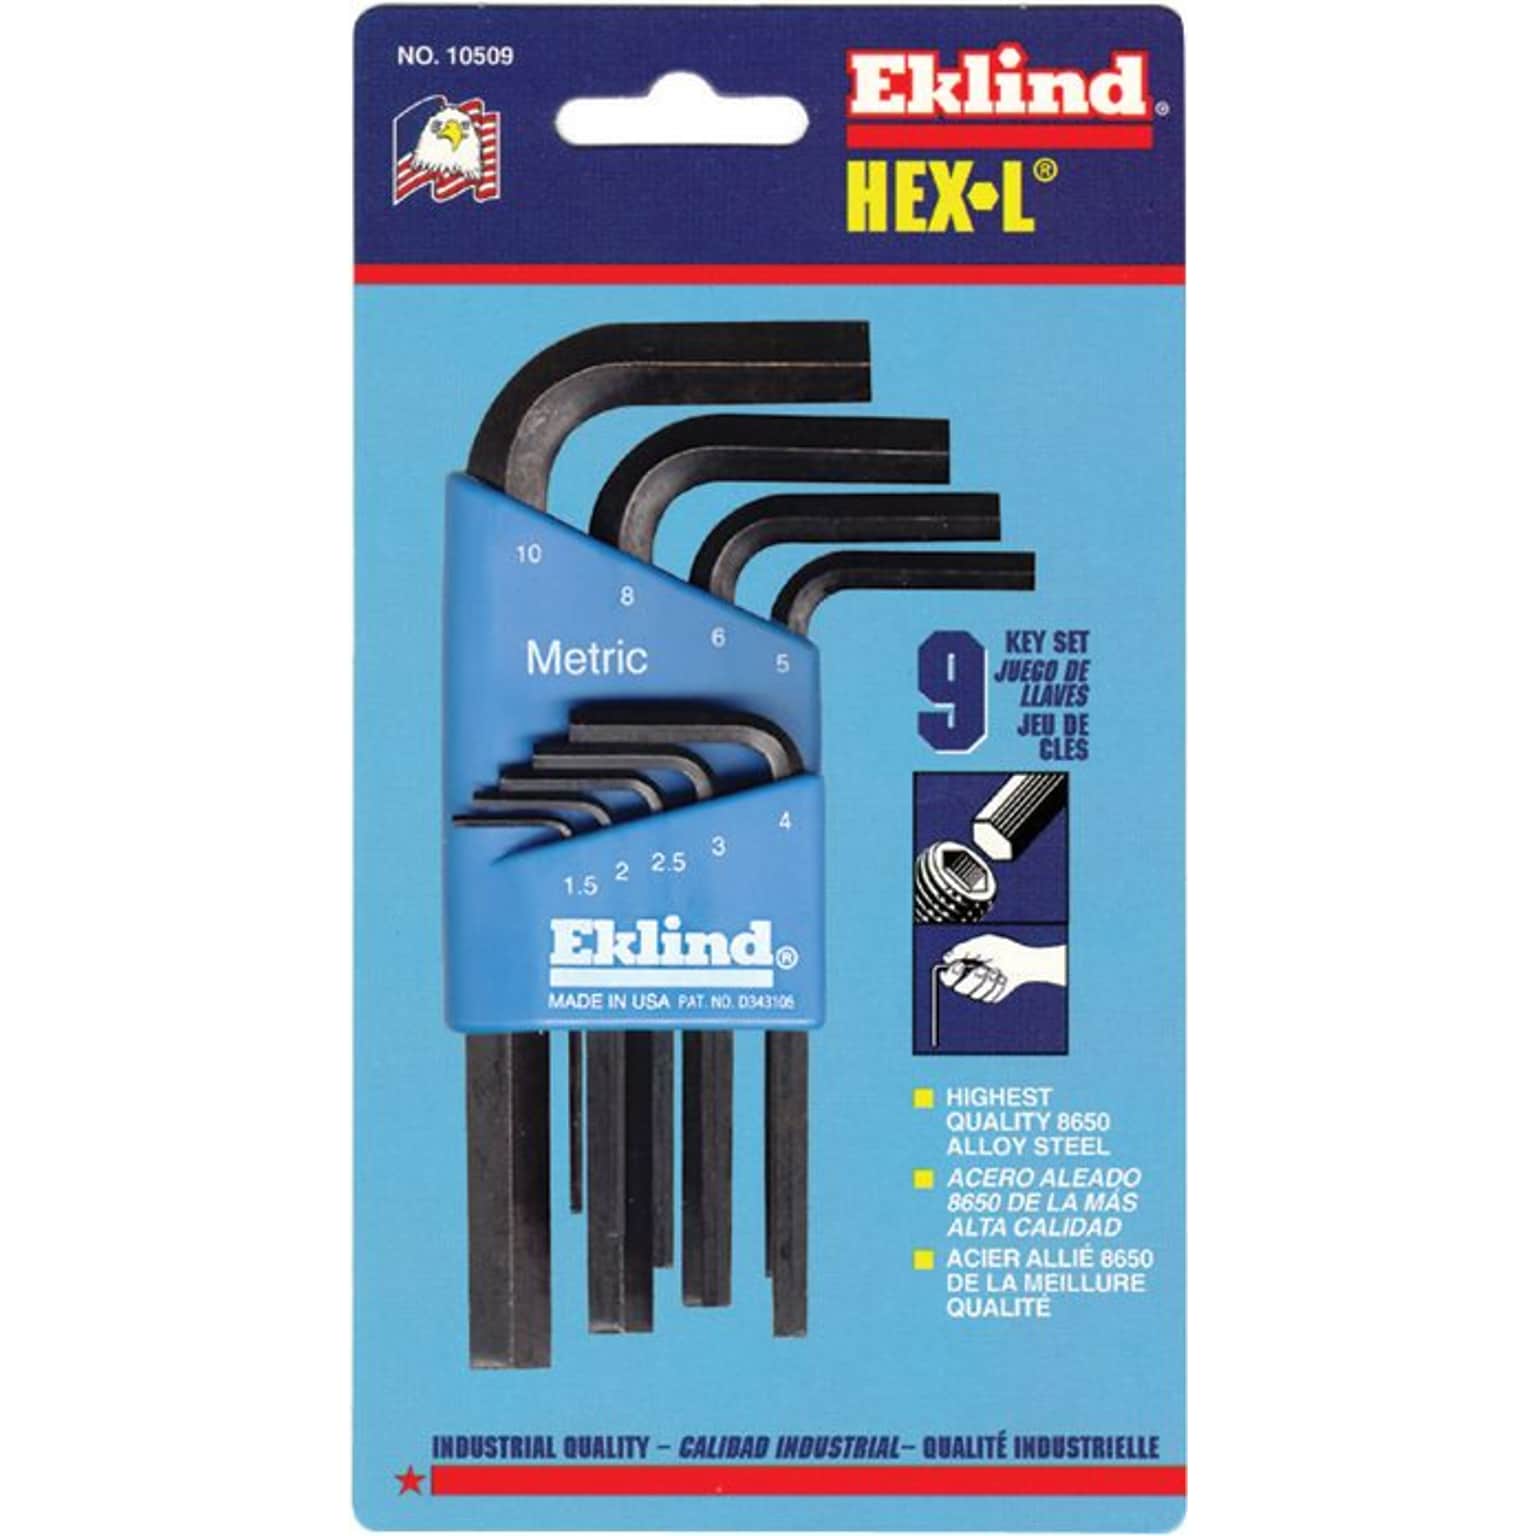 Eklind® Hex-L® Key Sets, Long Arm Metric L-Wrench, 9 piece